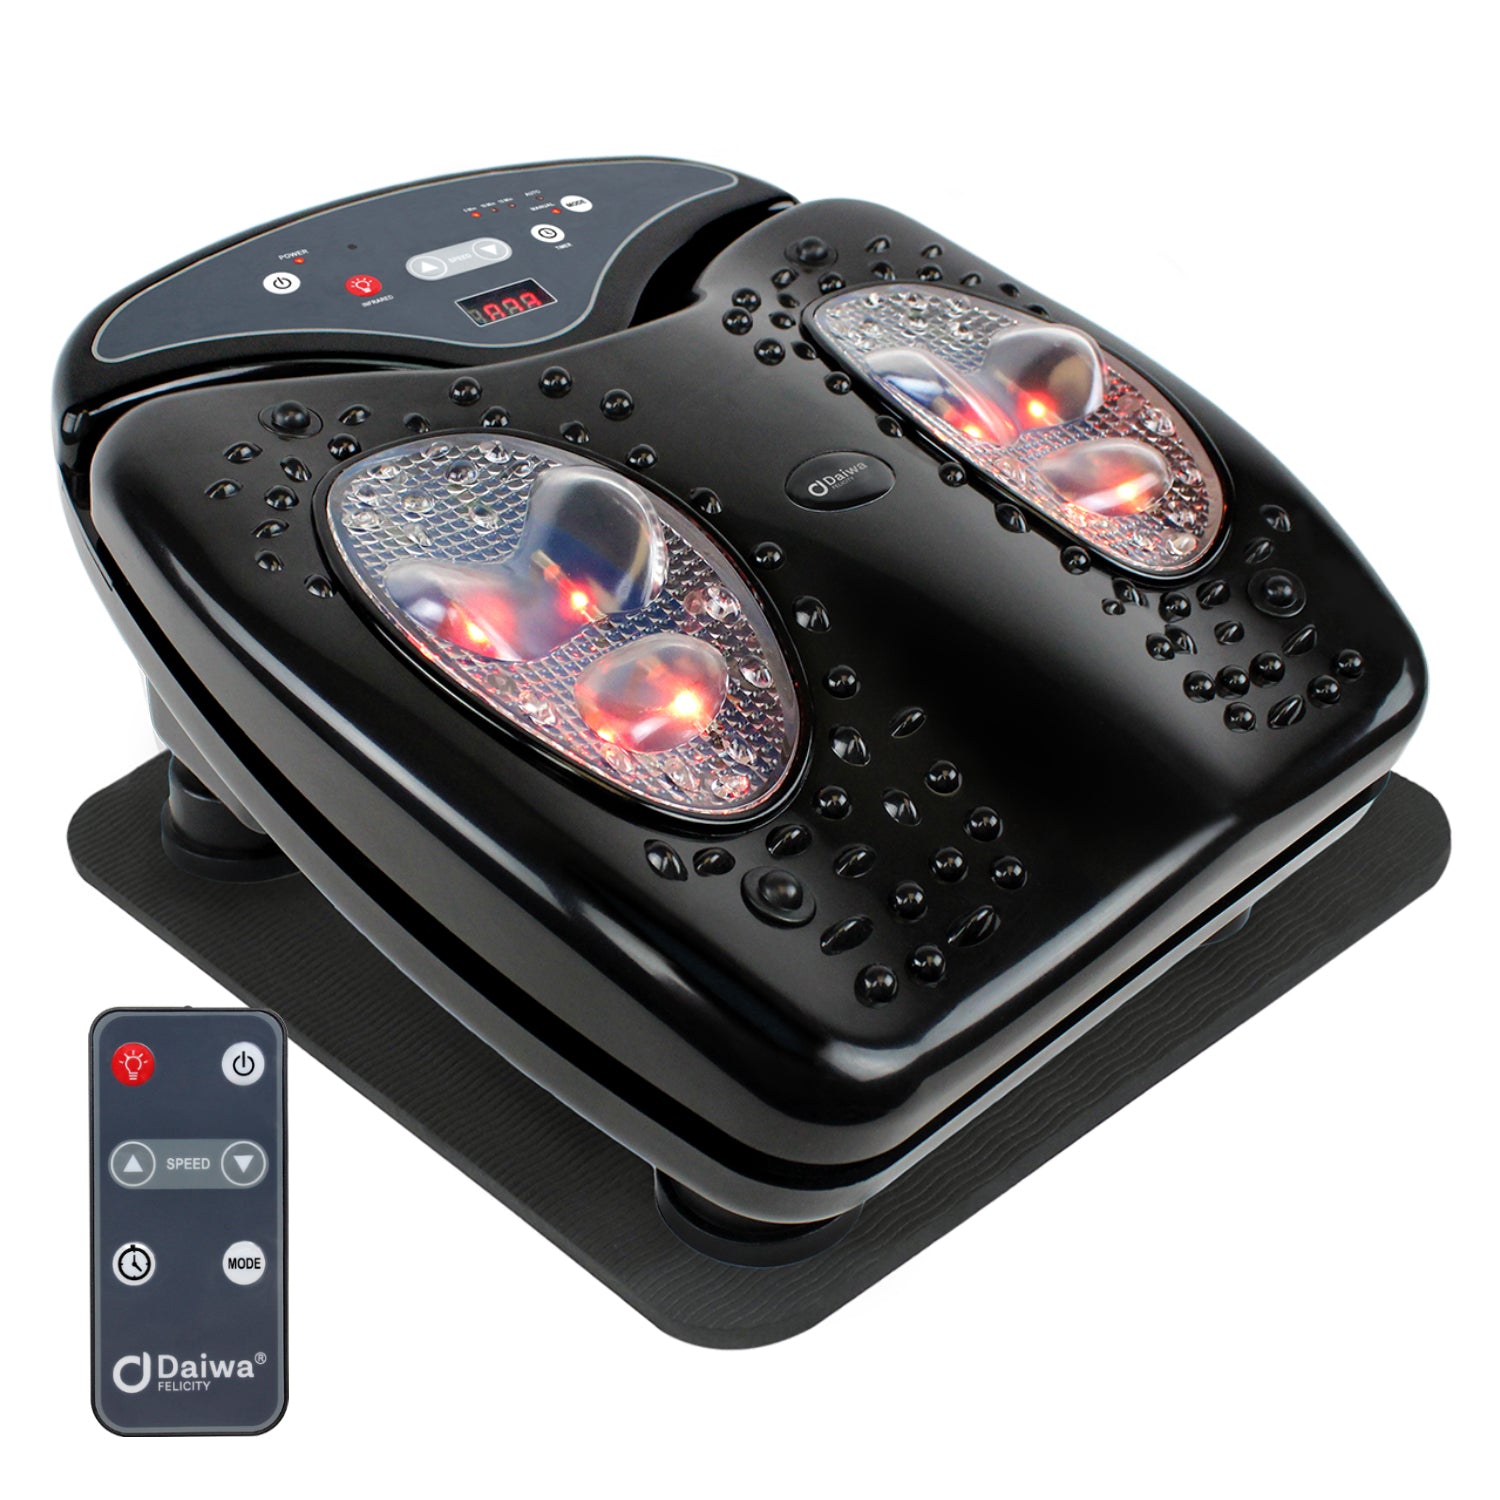 Footvibe Pro Infrared Vibrating Foot Massager FSA HSA Eligible